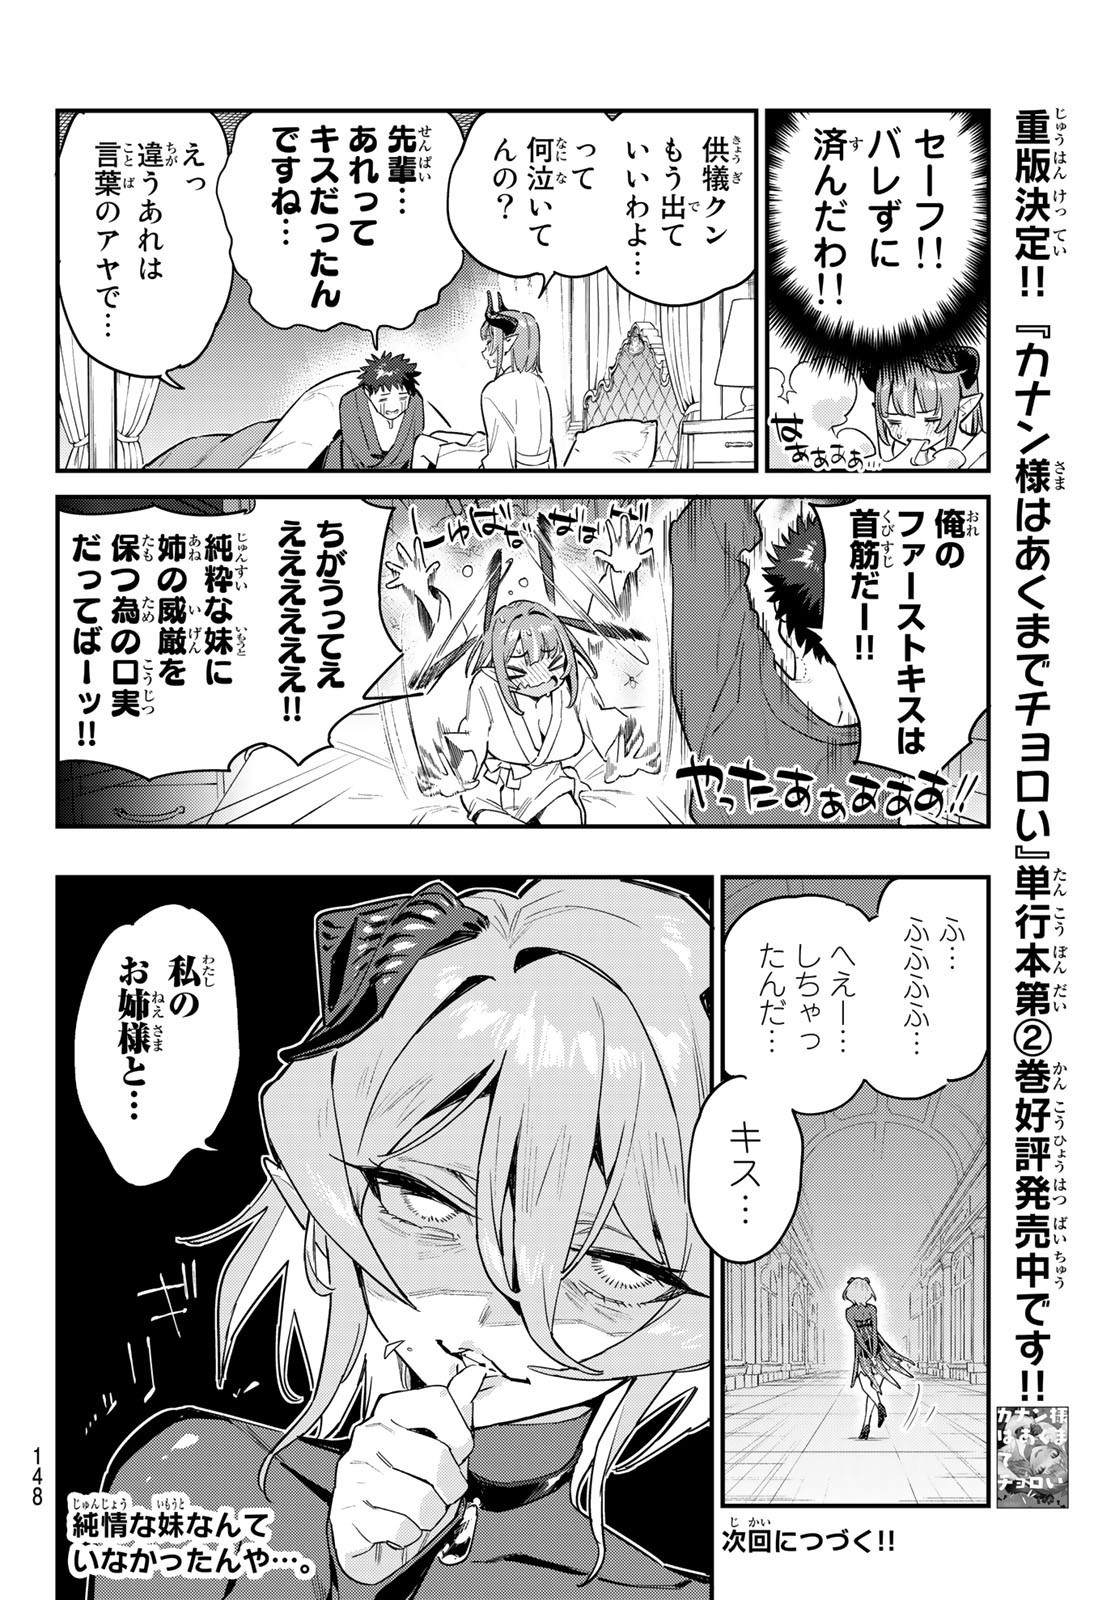 Kanan-sama wa Akumade Choroi - Chapter 041 - Page 8